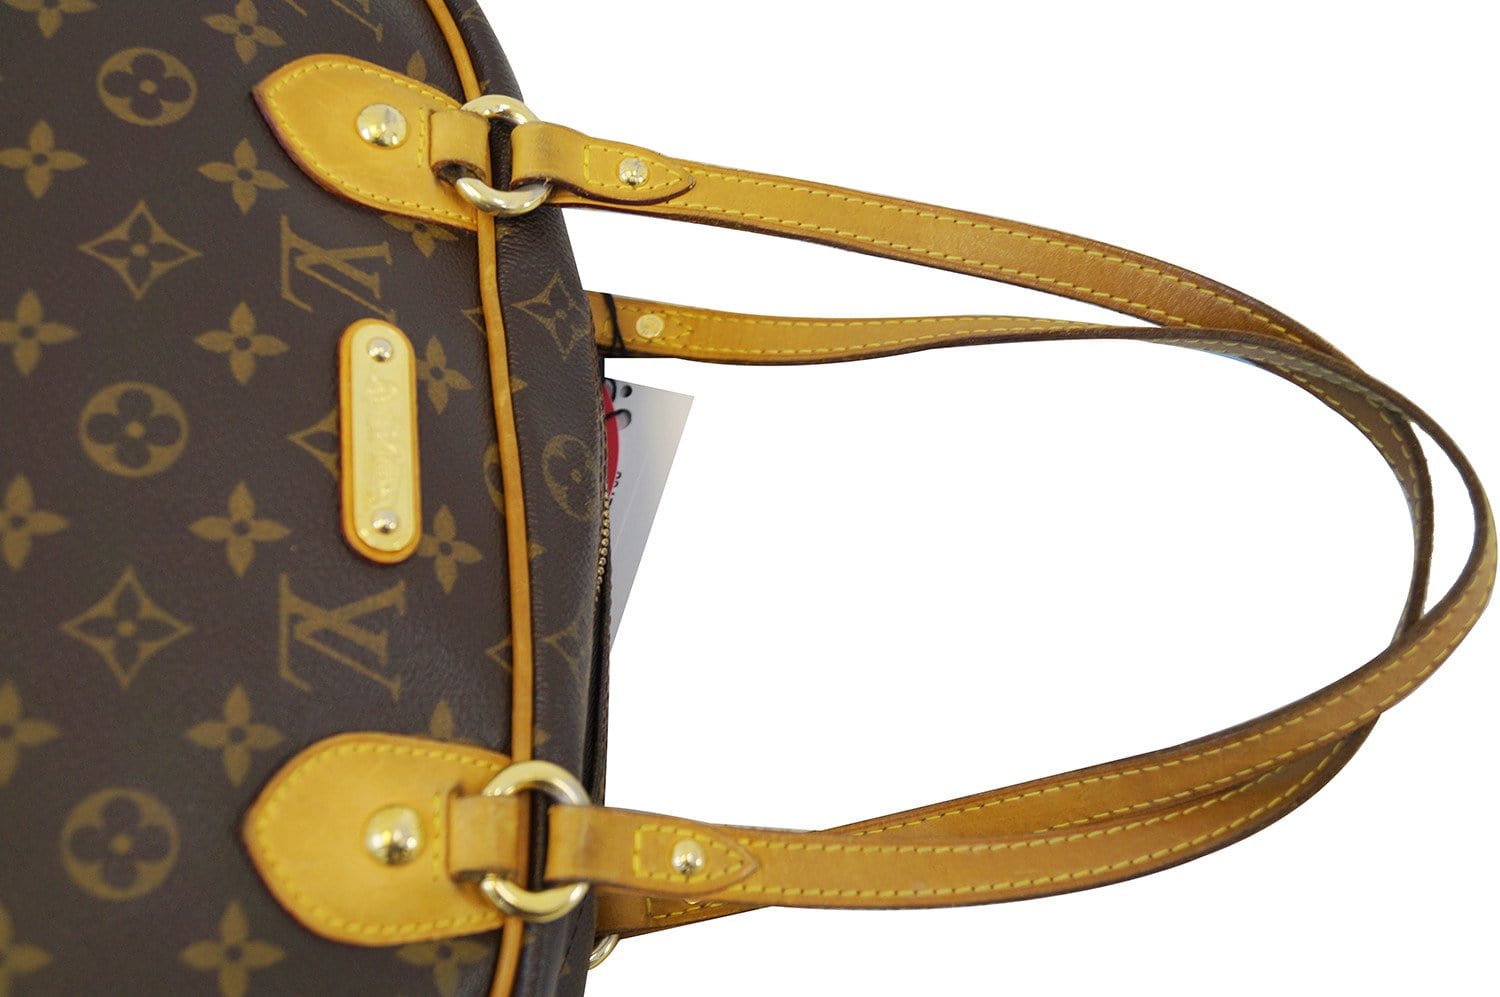 LOUIS VUITTON MONTORGUEIL GM Handbag Includes: ORIG LOCK &